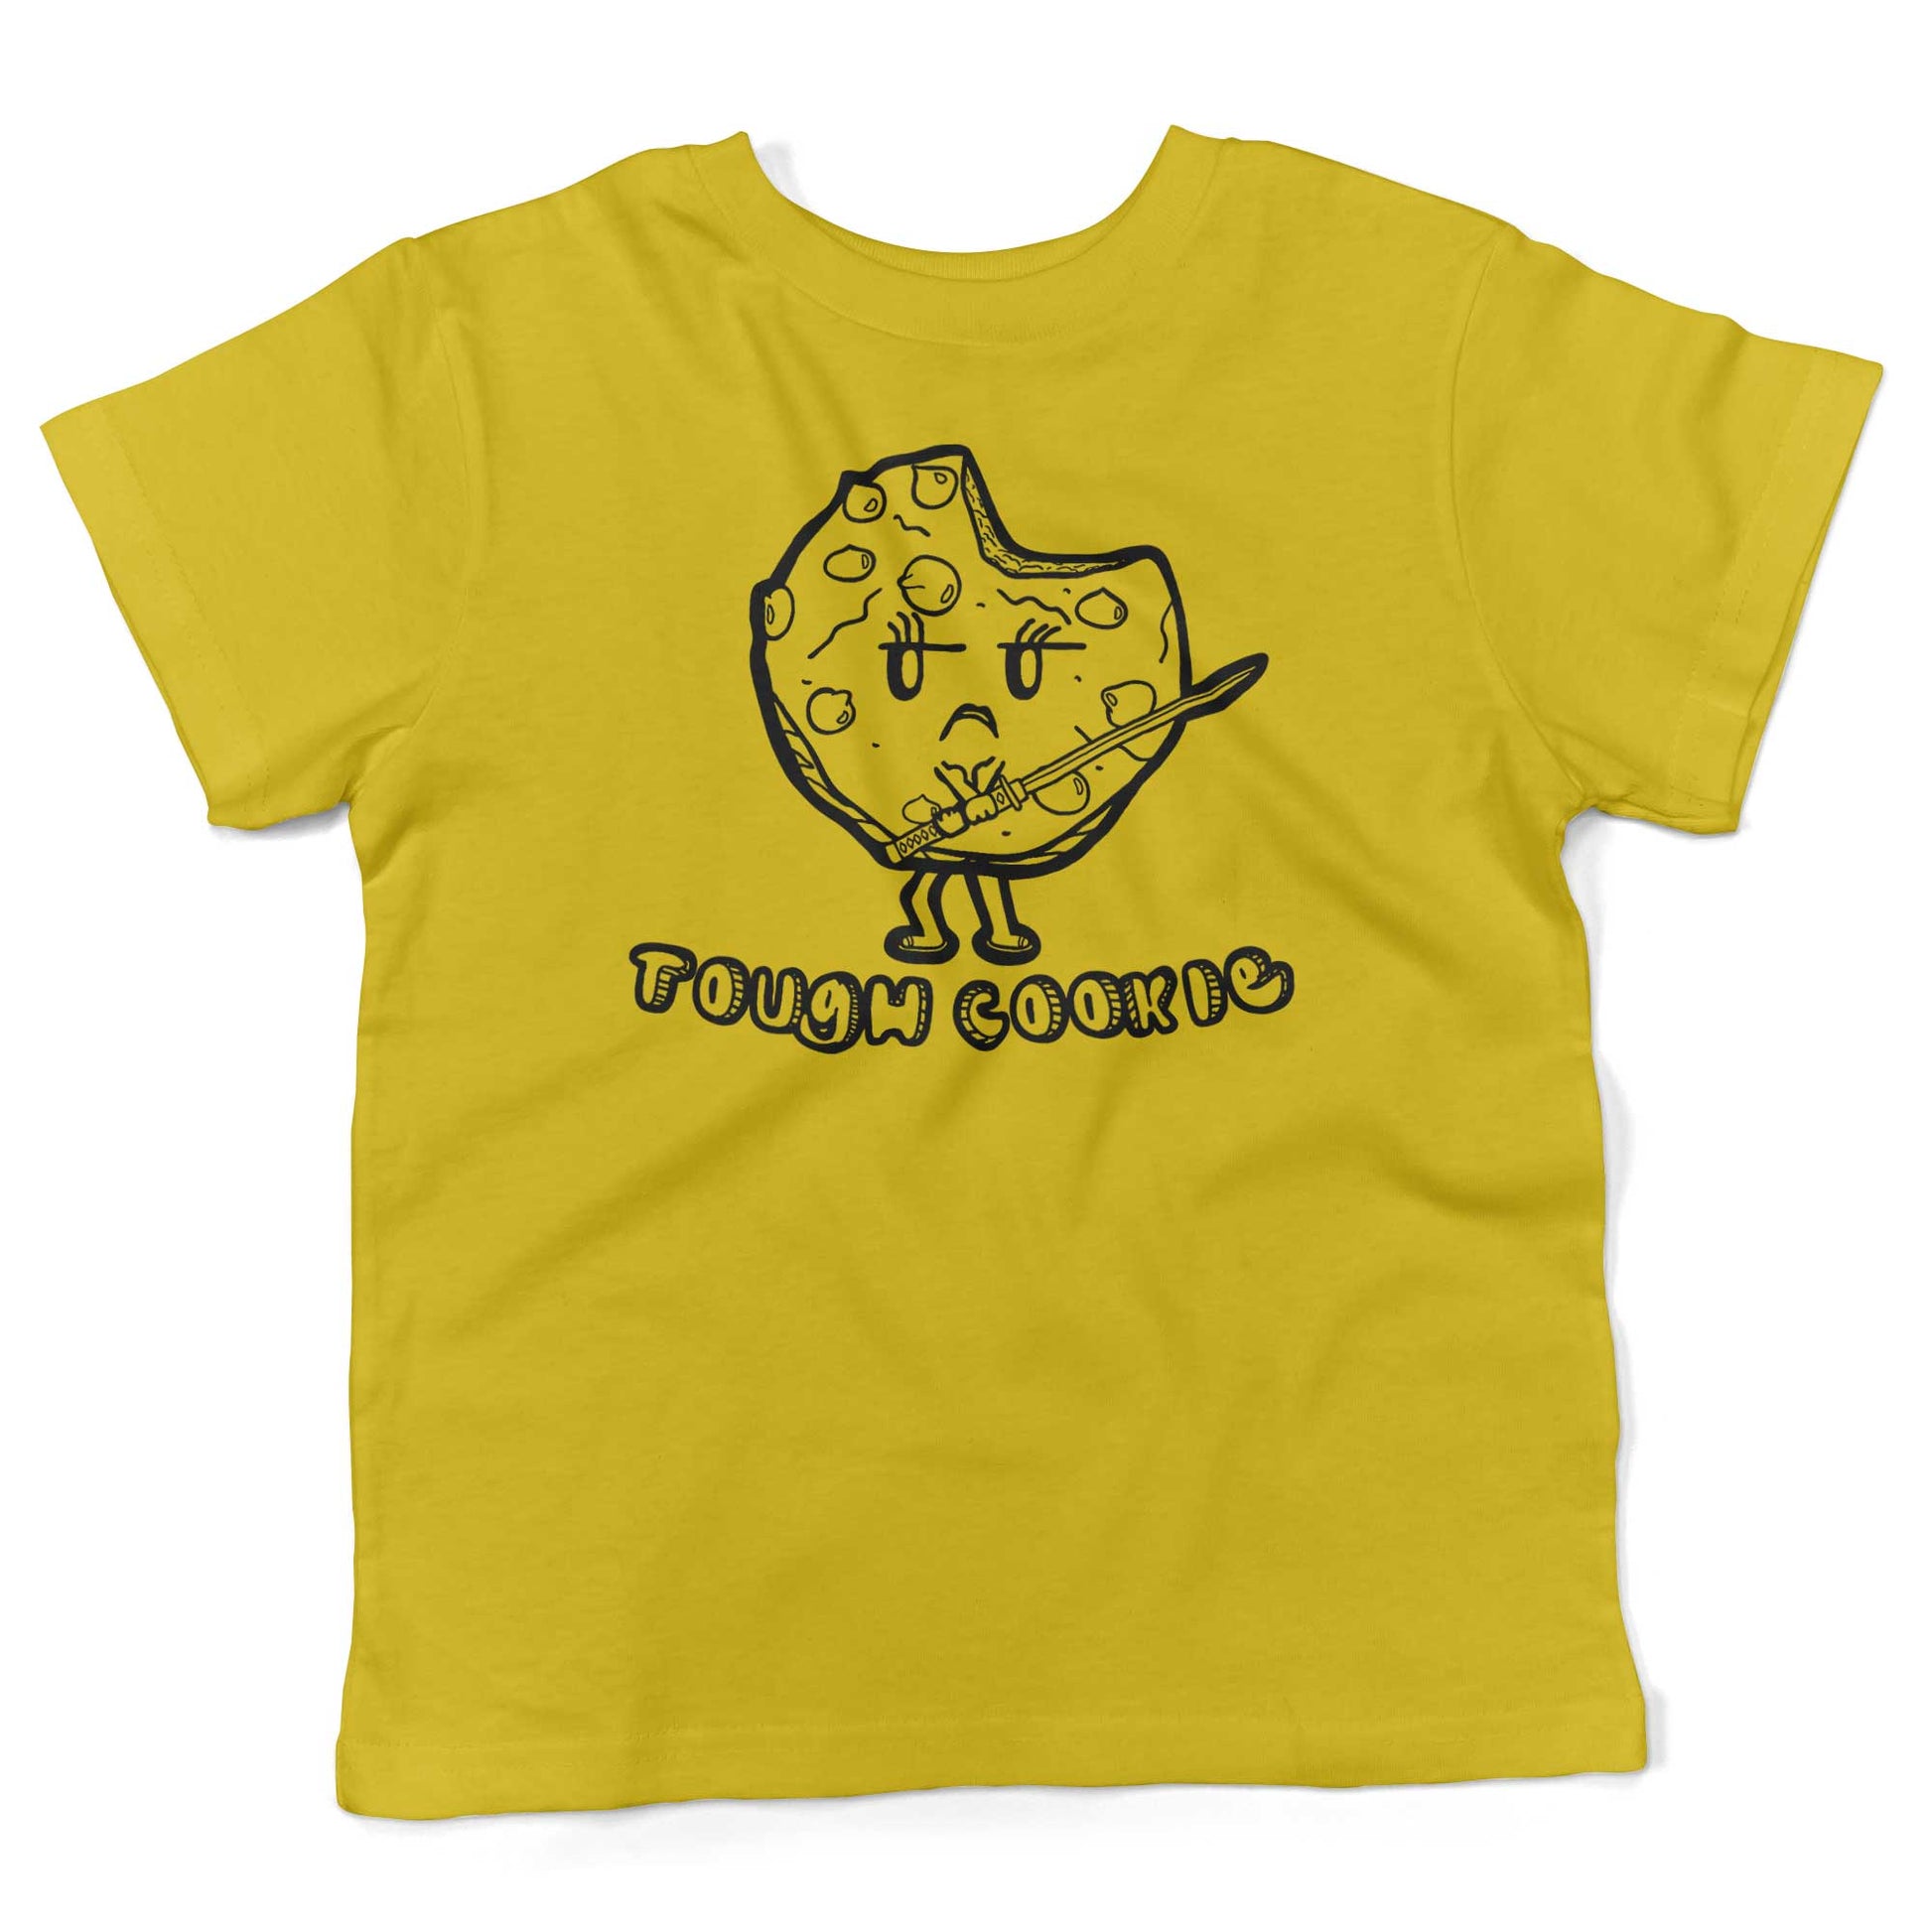 Tough Cookie Toddler Shirt-Sunshine Yellow-2T